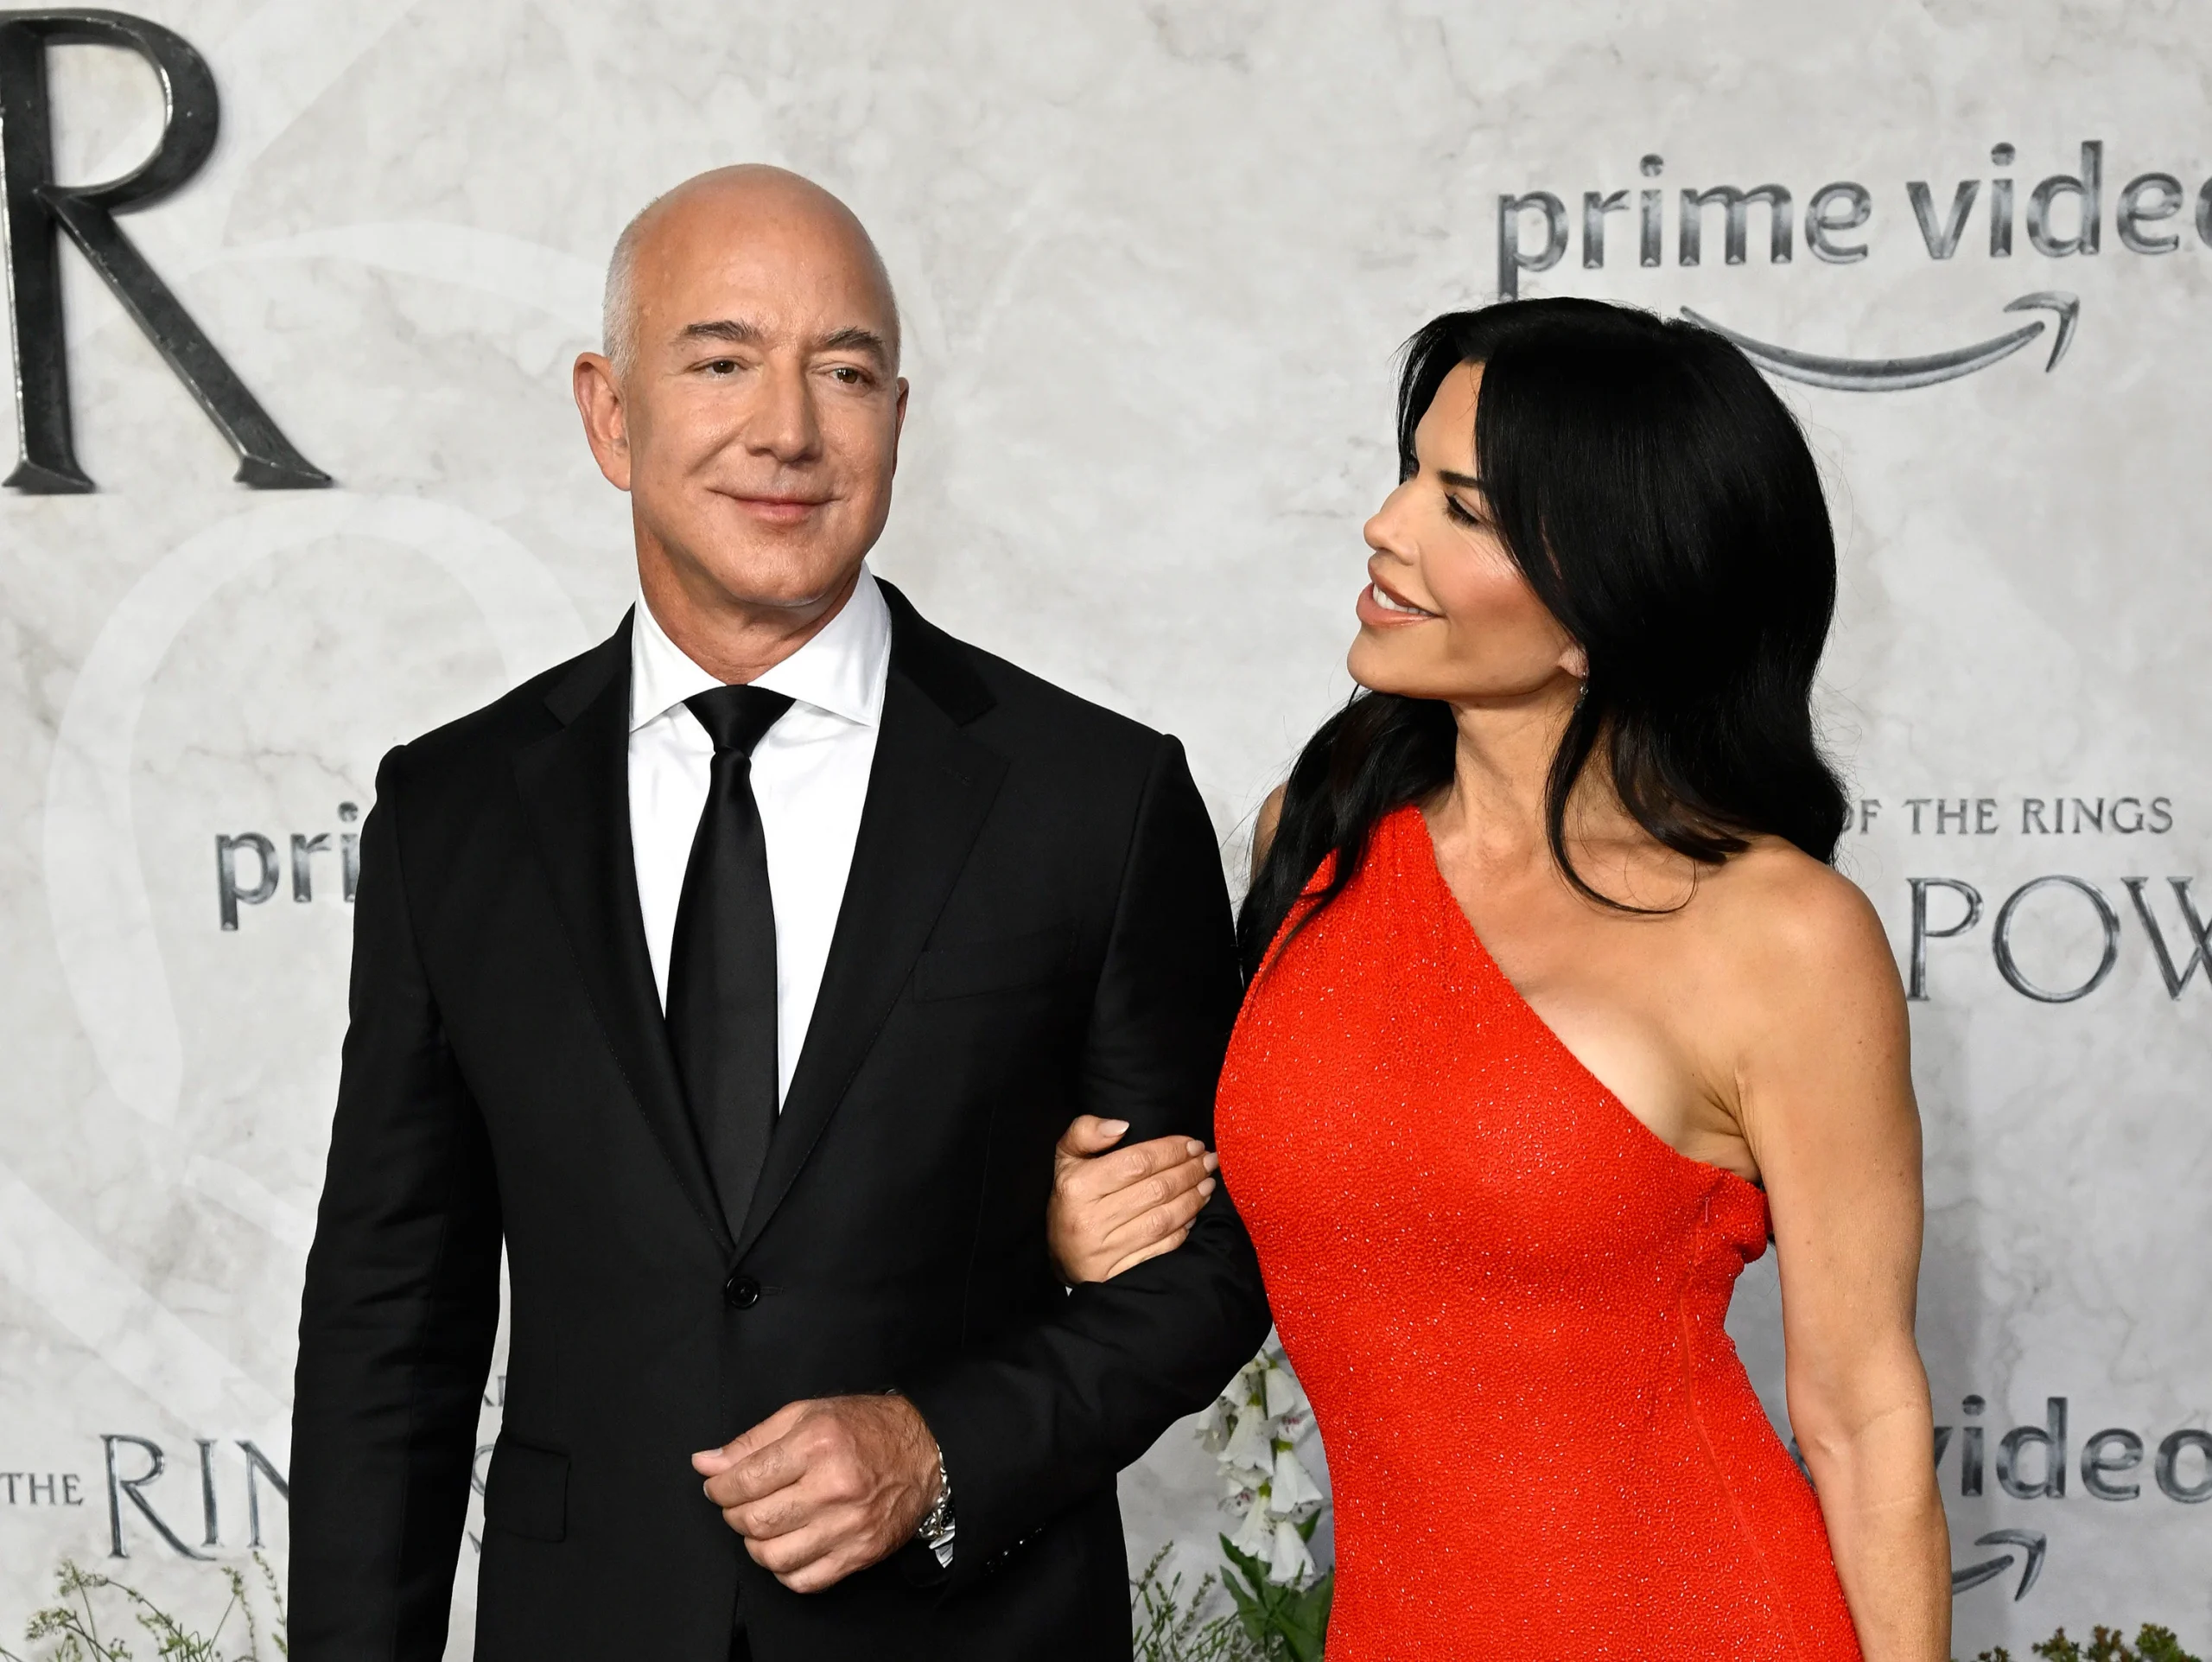 Amazon Founder Jeff Bezos Engaged With Lauren Sanchez